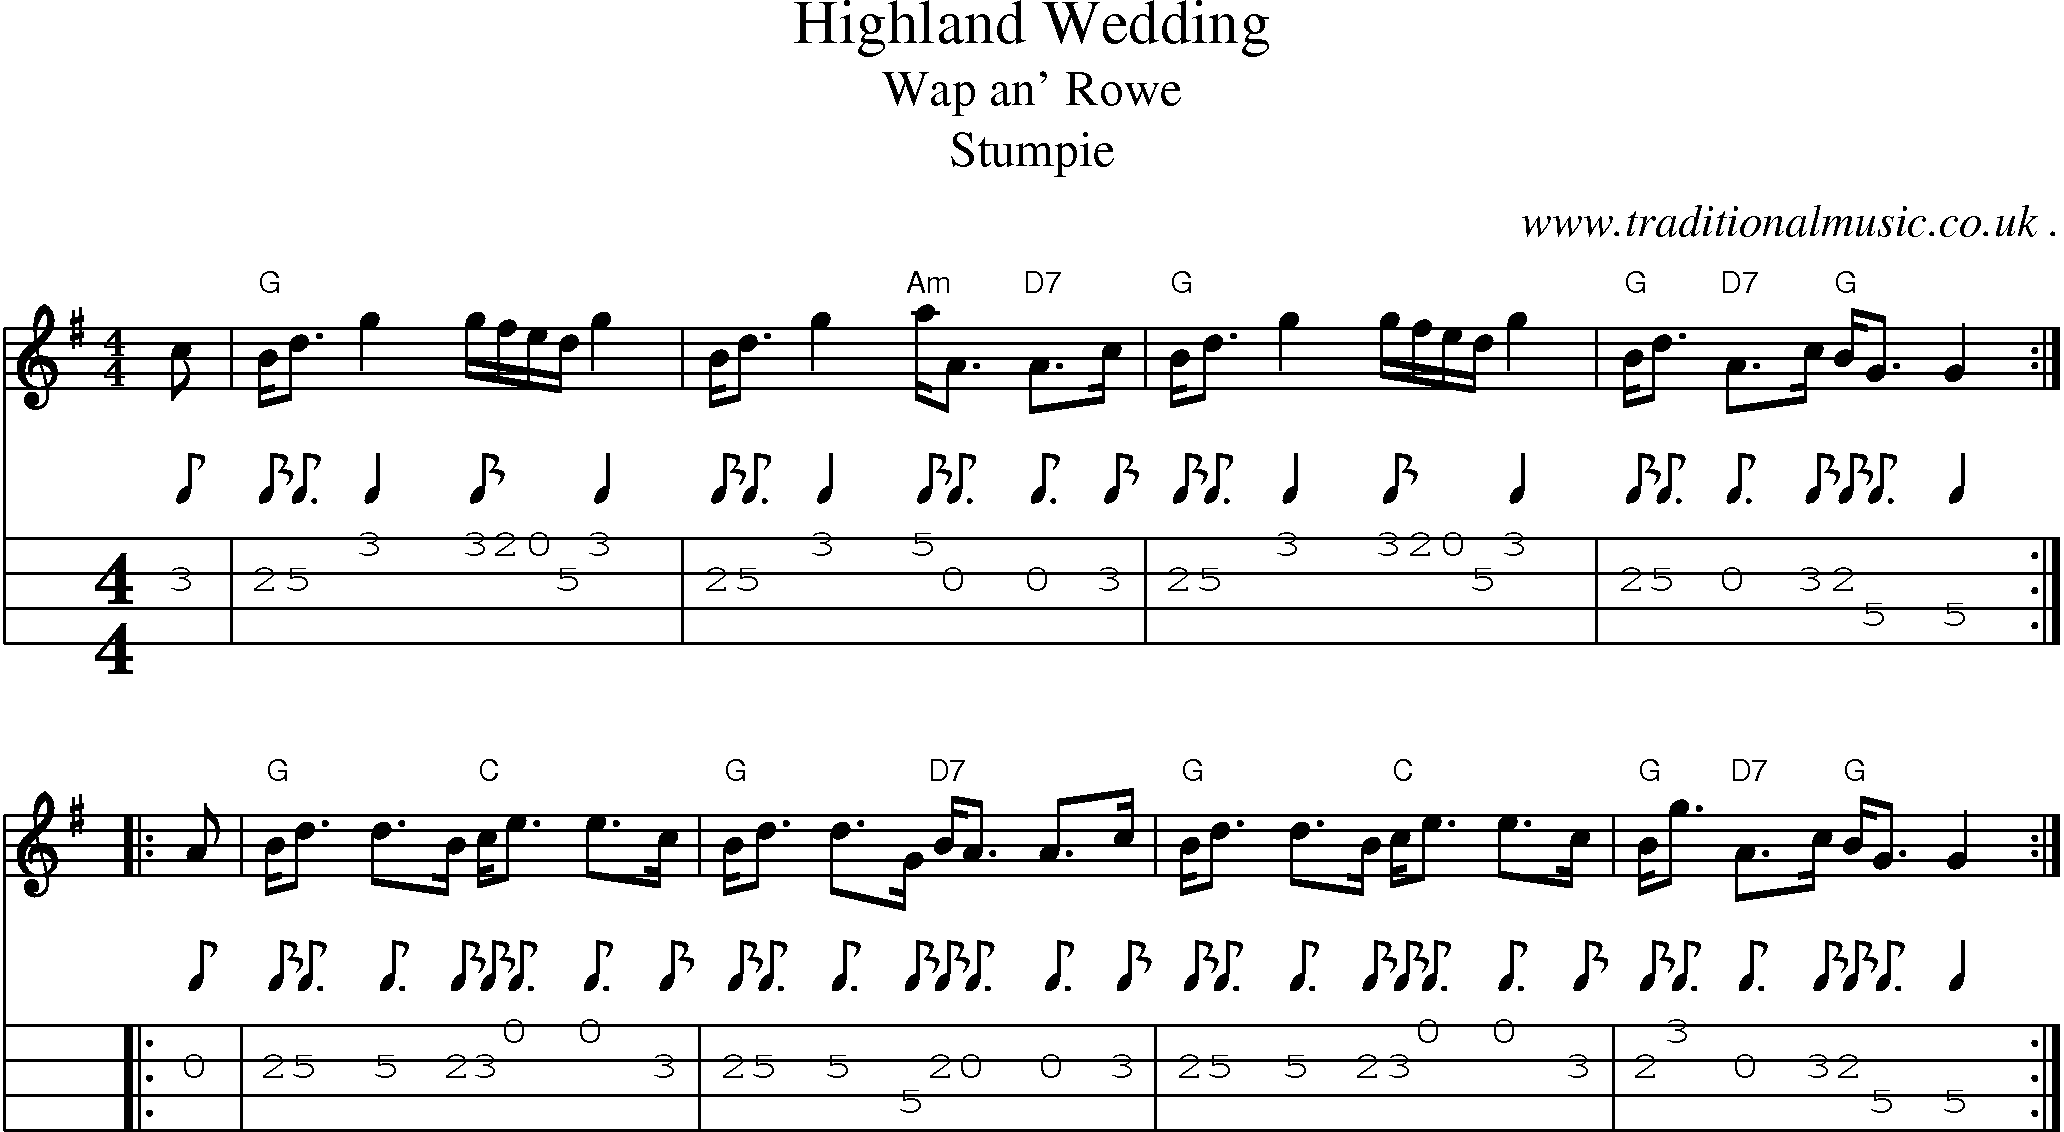 Sheet-music  score, Chords and Mandolin Tabs for Highland Wedding